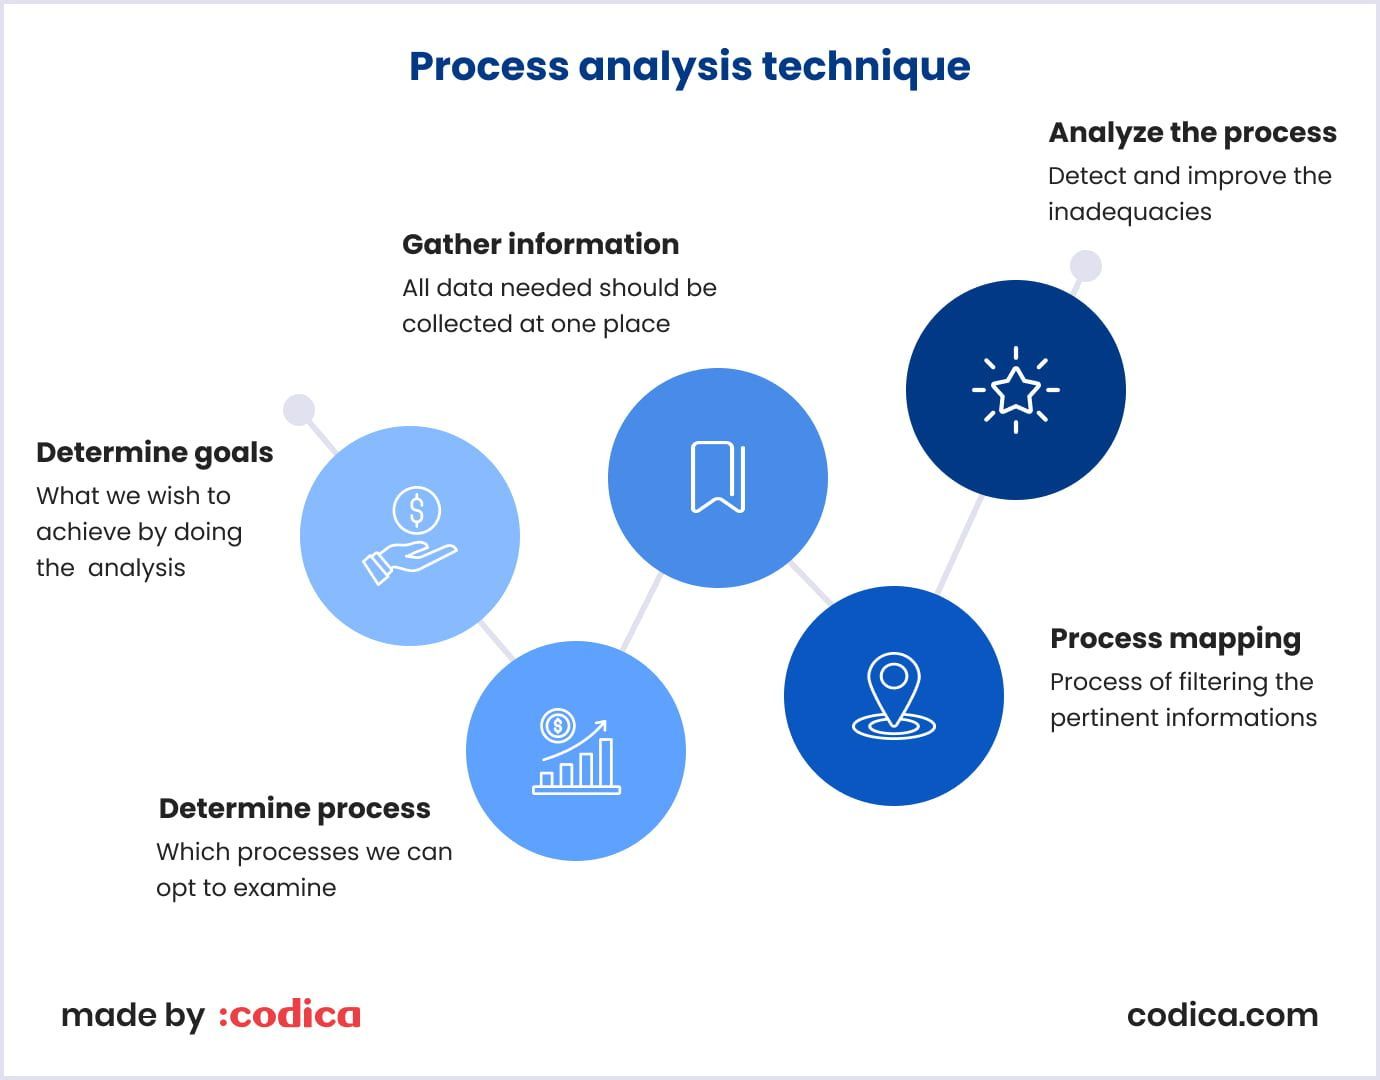 Process analysis technique